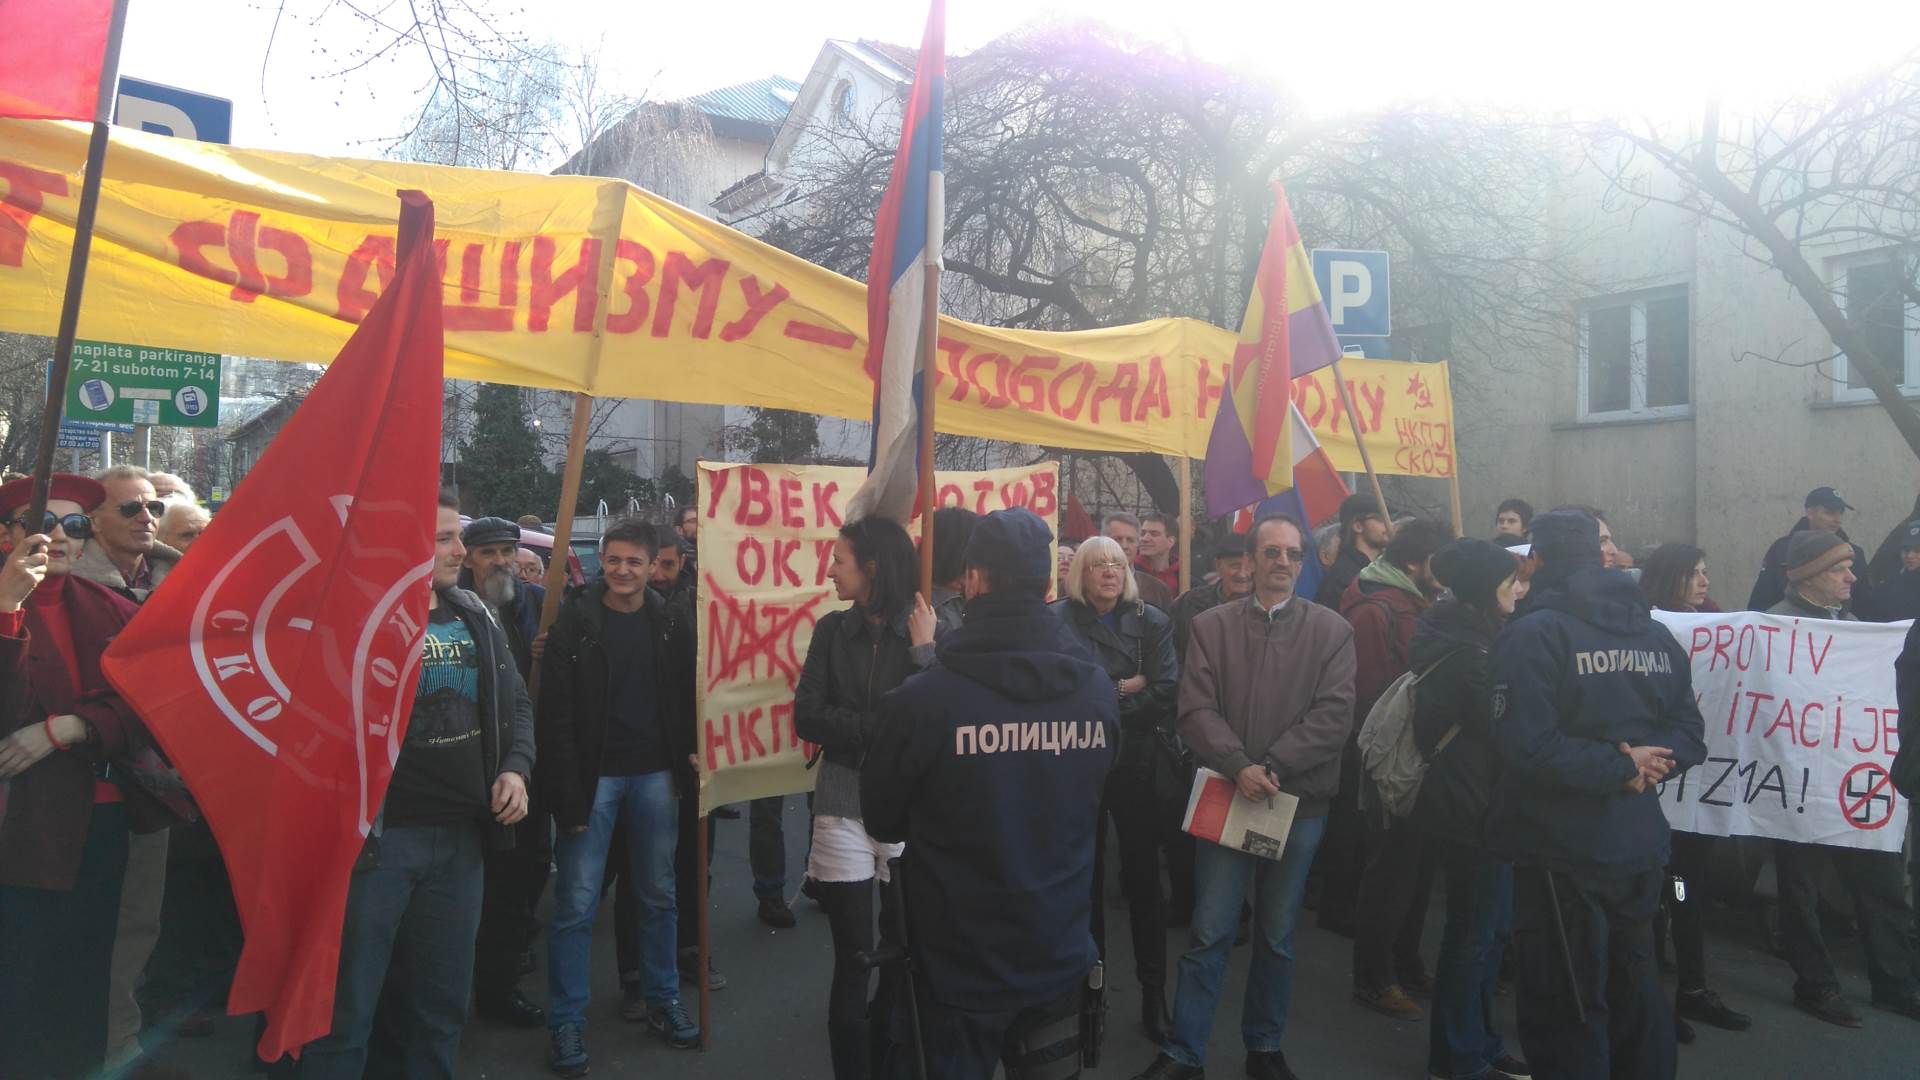  Milan Nedić - Protesti pritiv rehabilitacije 